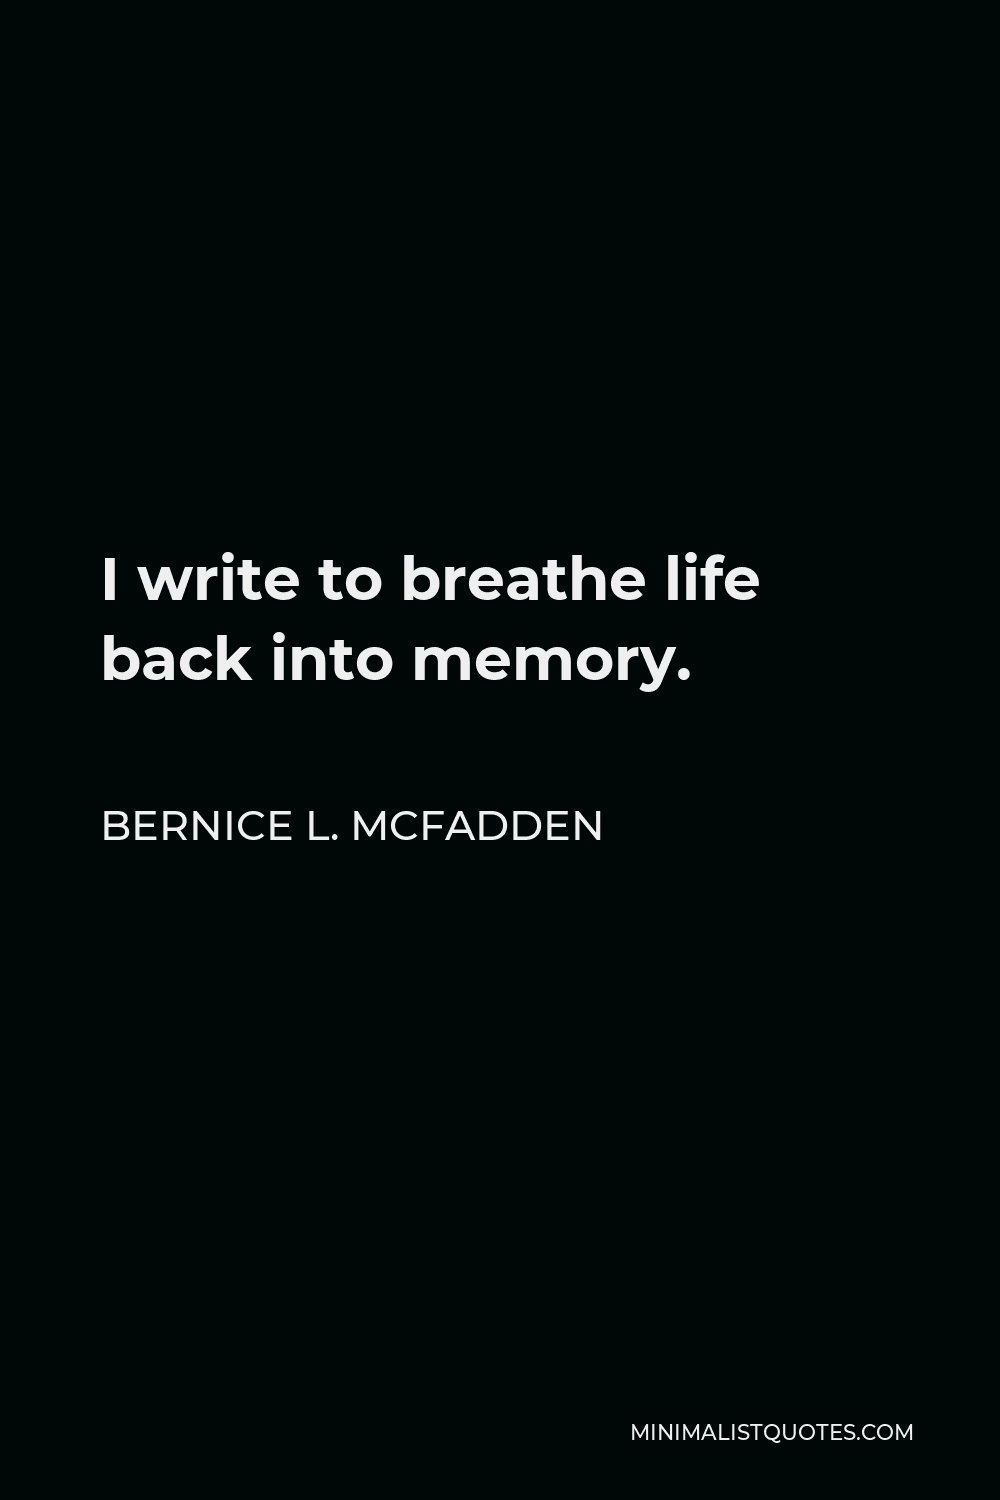 Bernice L. McFadden Quote - I write to breathe life back into memory.